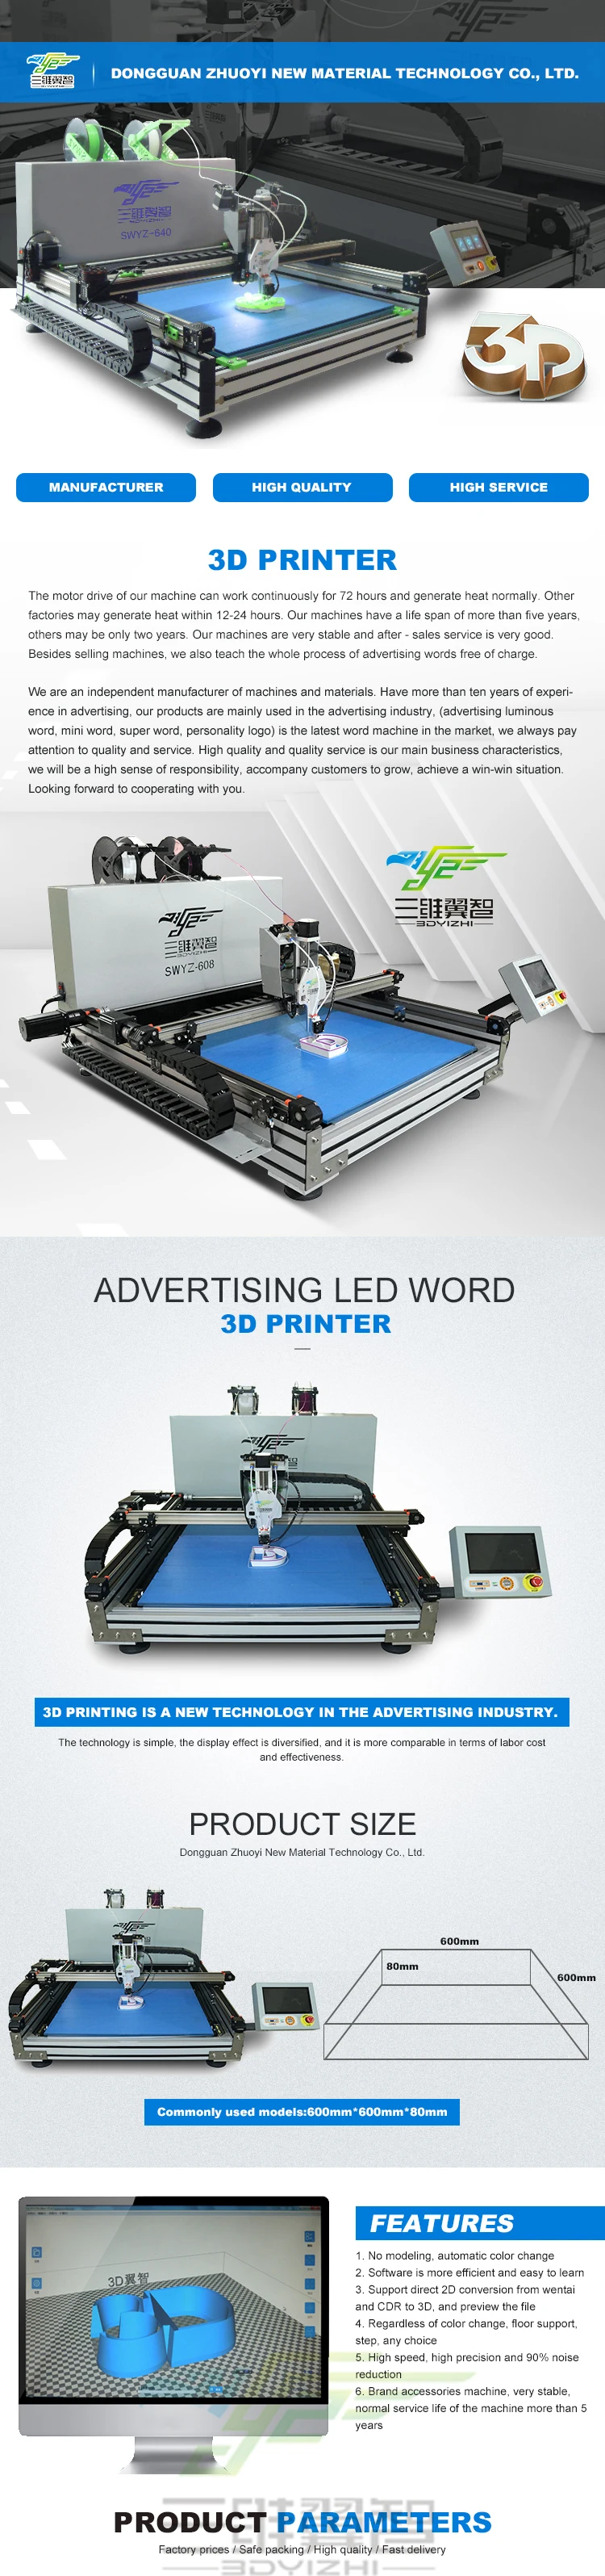 2d to 3d conversion printer